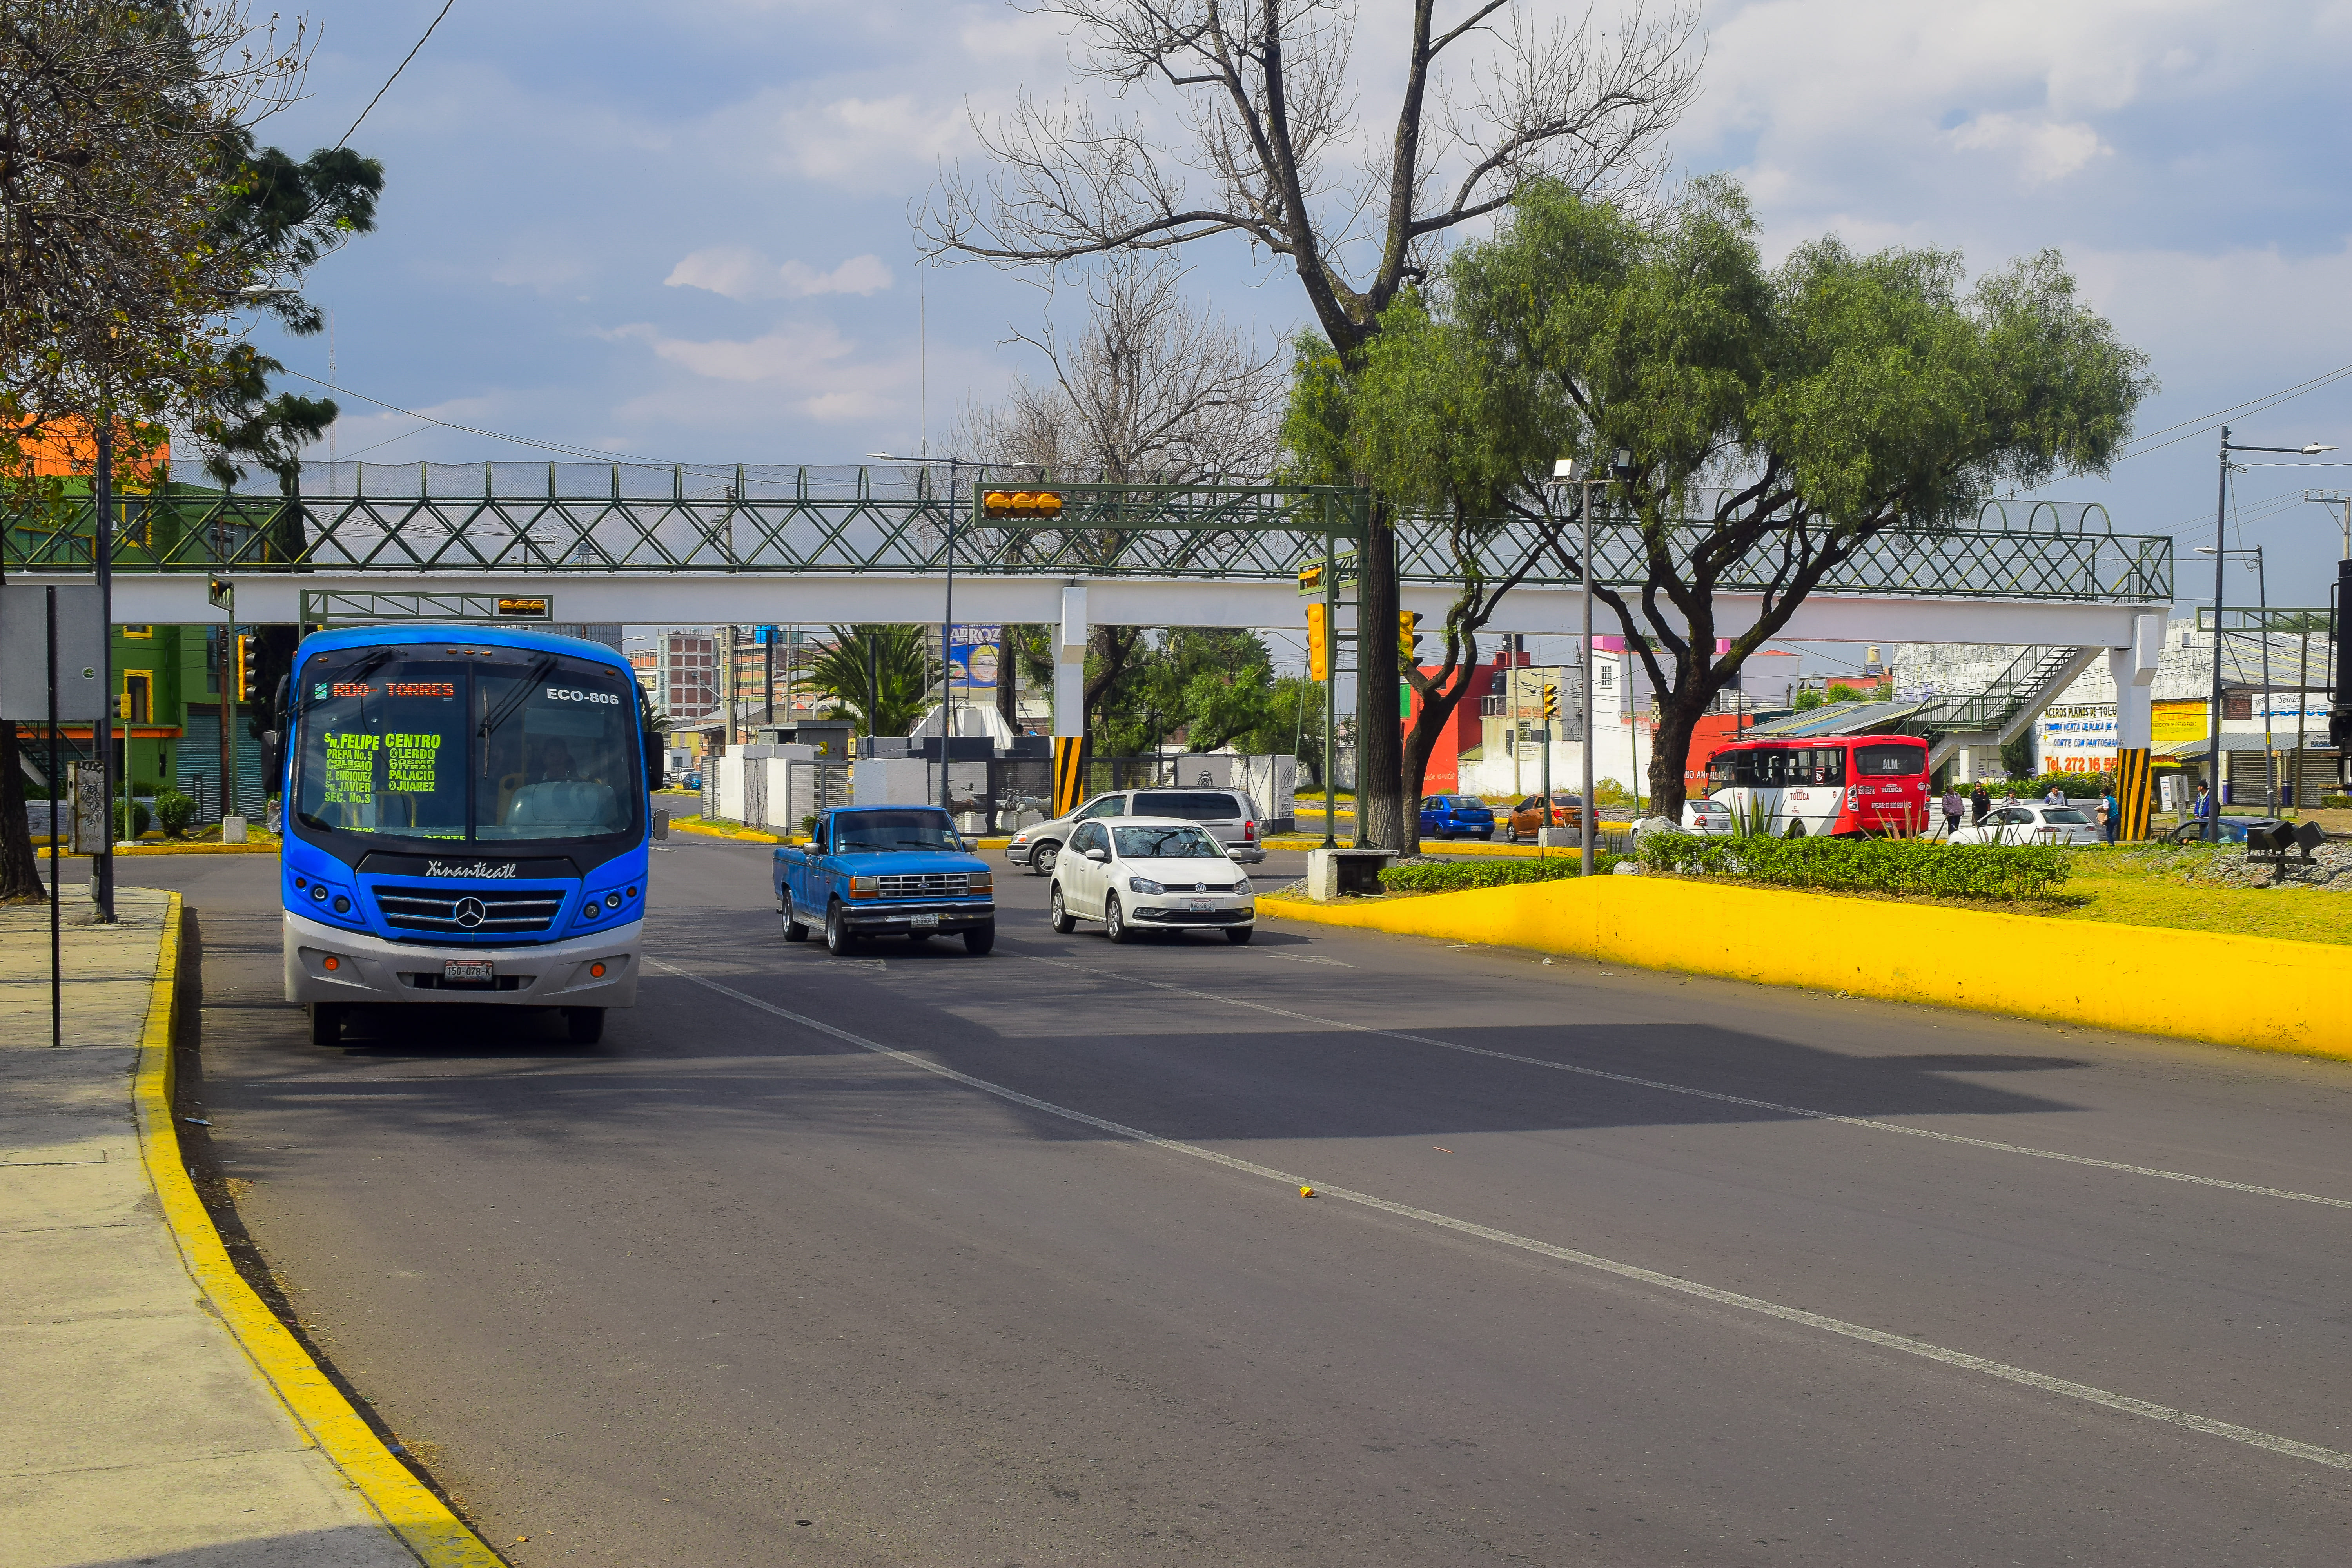 Pasajeros no usan cubrebocas en transporte público en Toluca